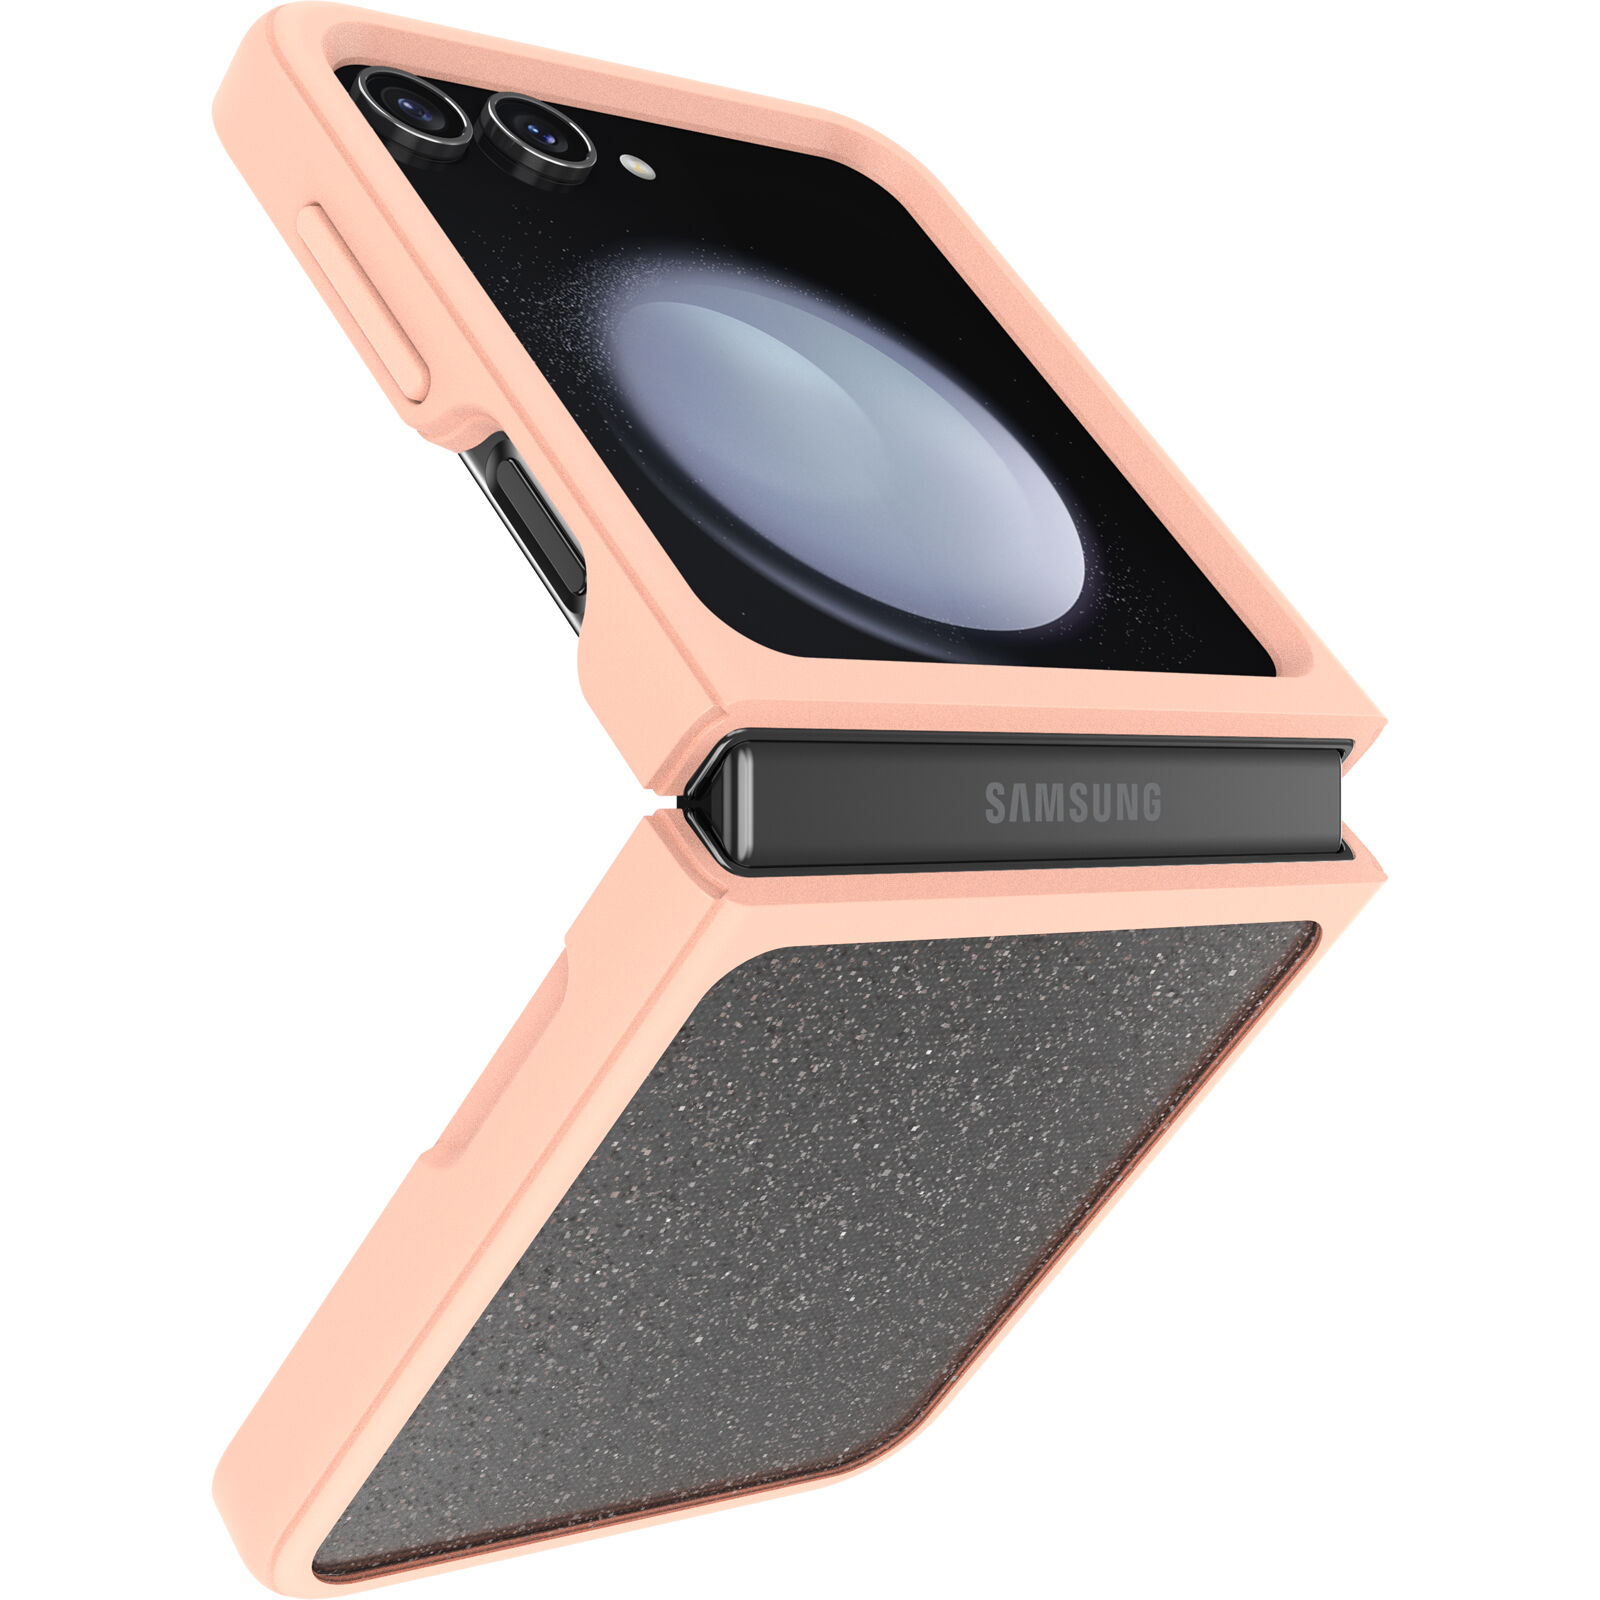 Otterbox รุ่น Thin Flex - เคส Galaxy Z Flip 5 - สี Sweet Peach